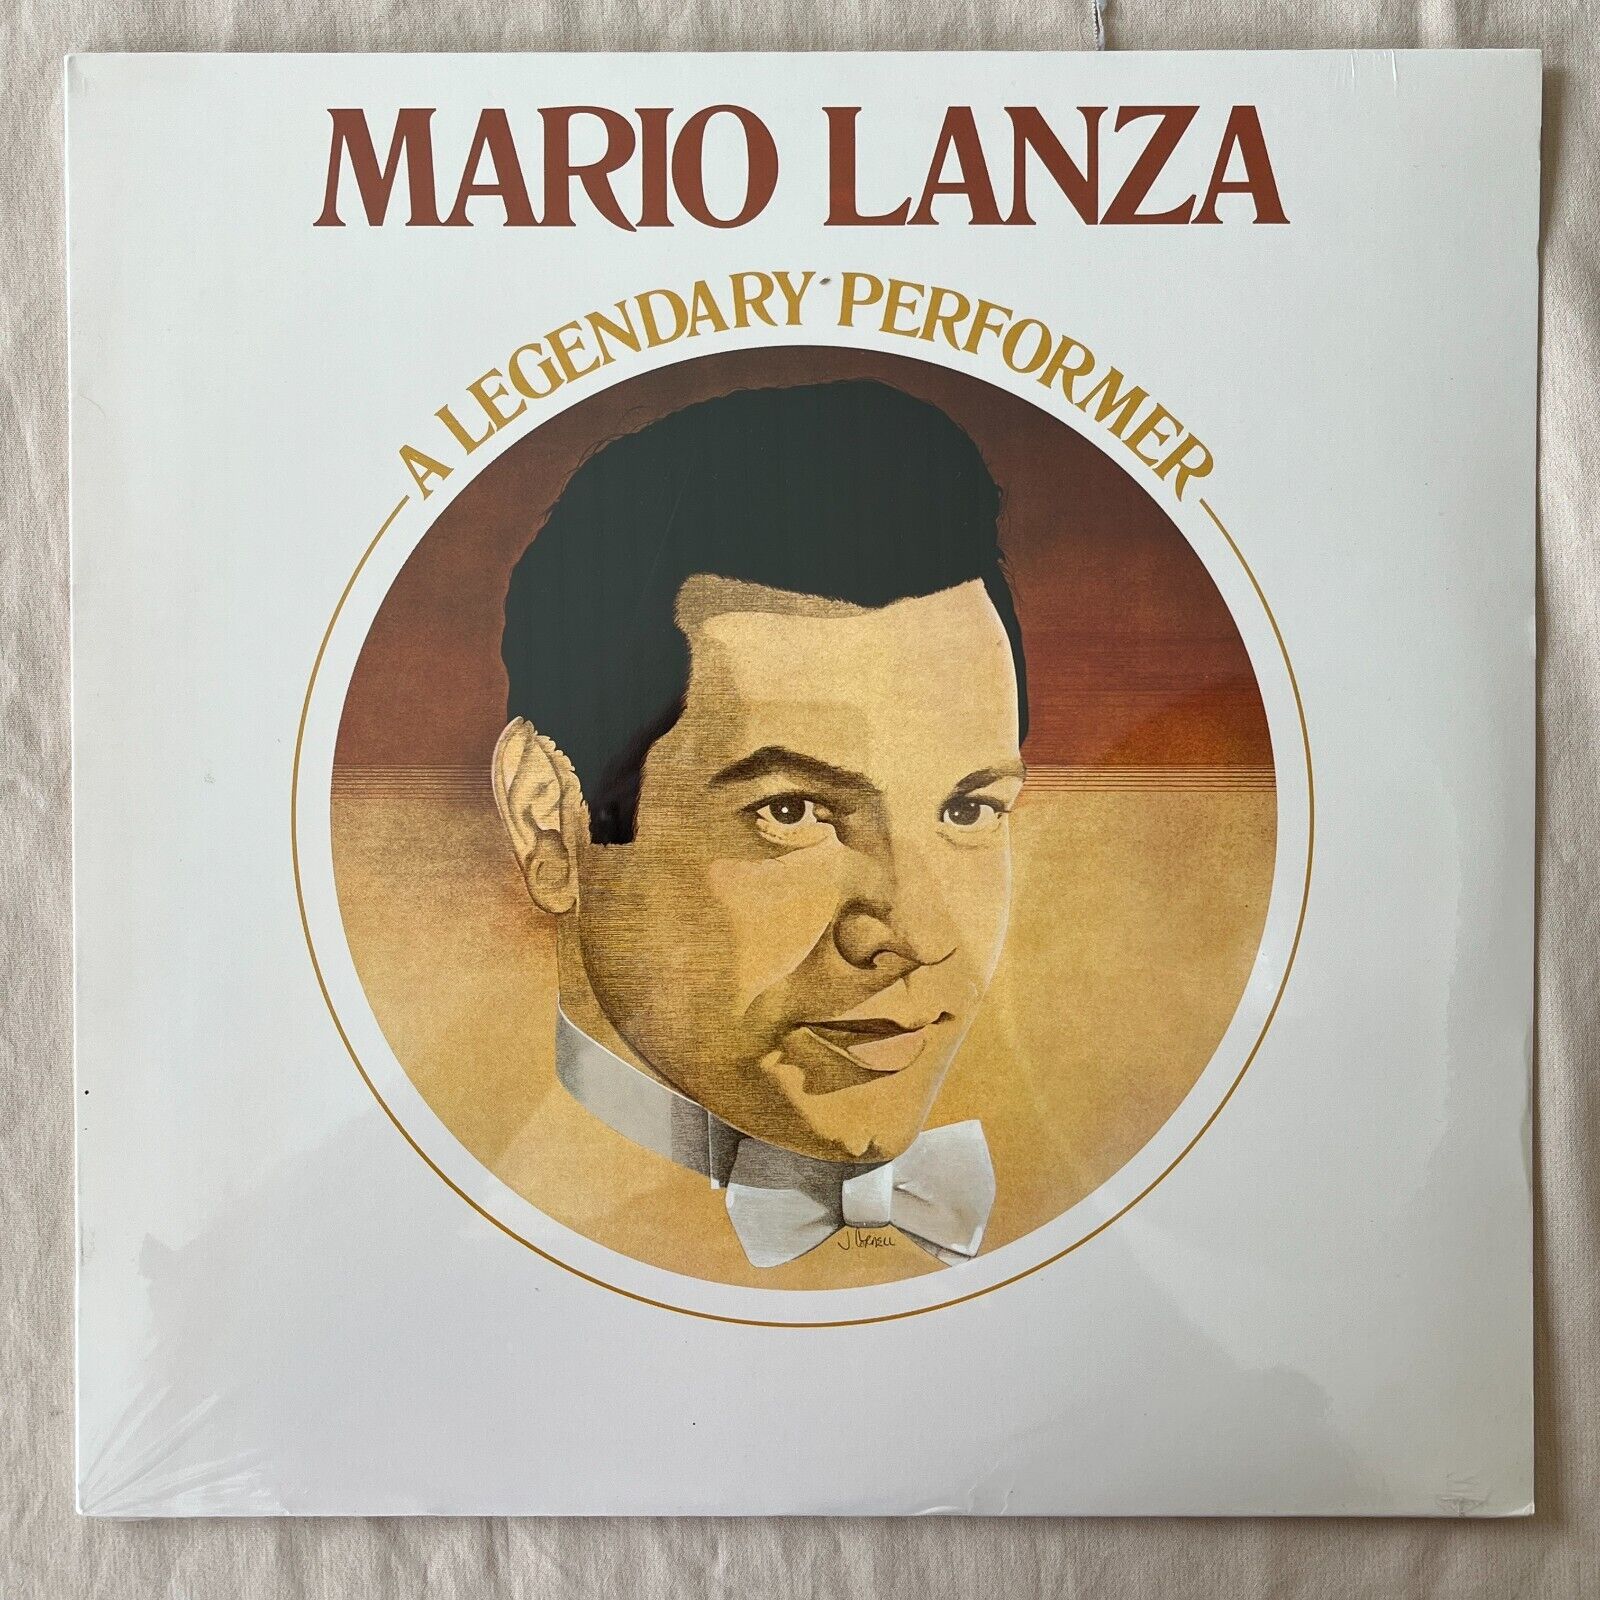 MARIO LANZA A Legendary Performer 1976 Vinyl LP RCA CRL1-1750(e) - MINT